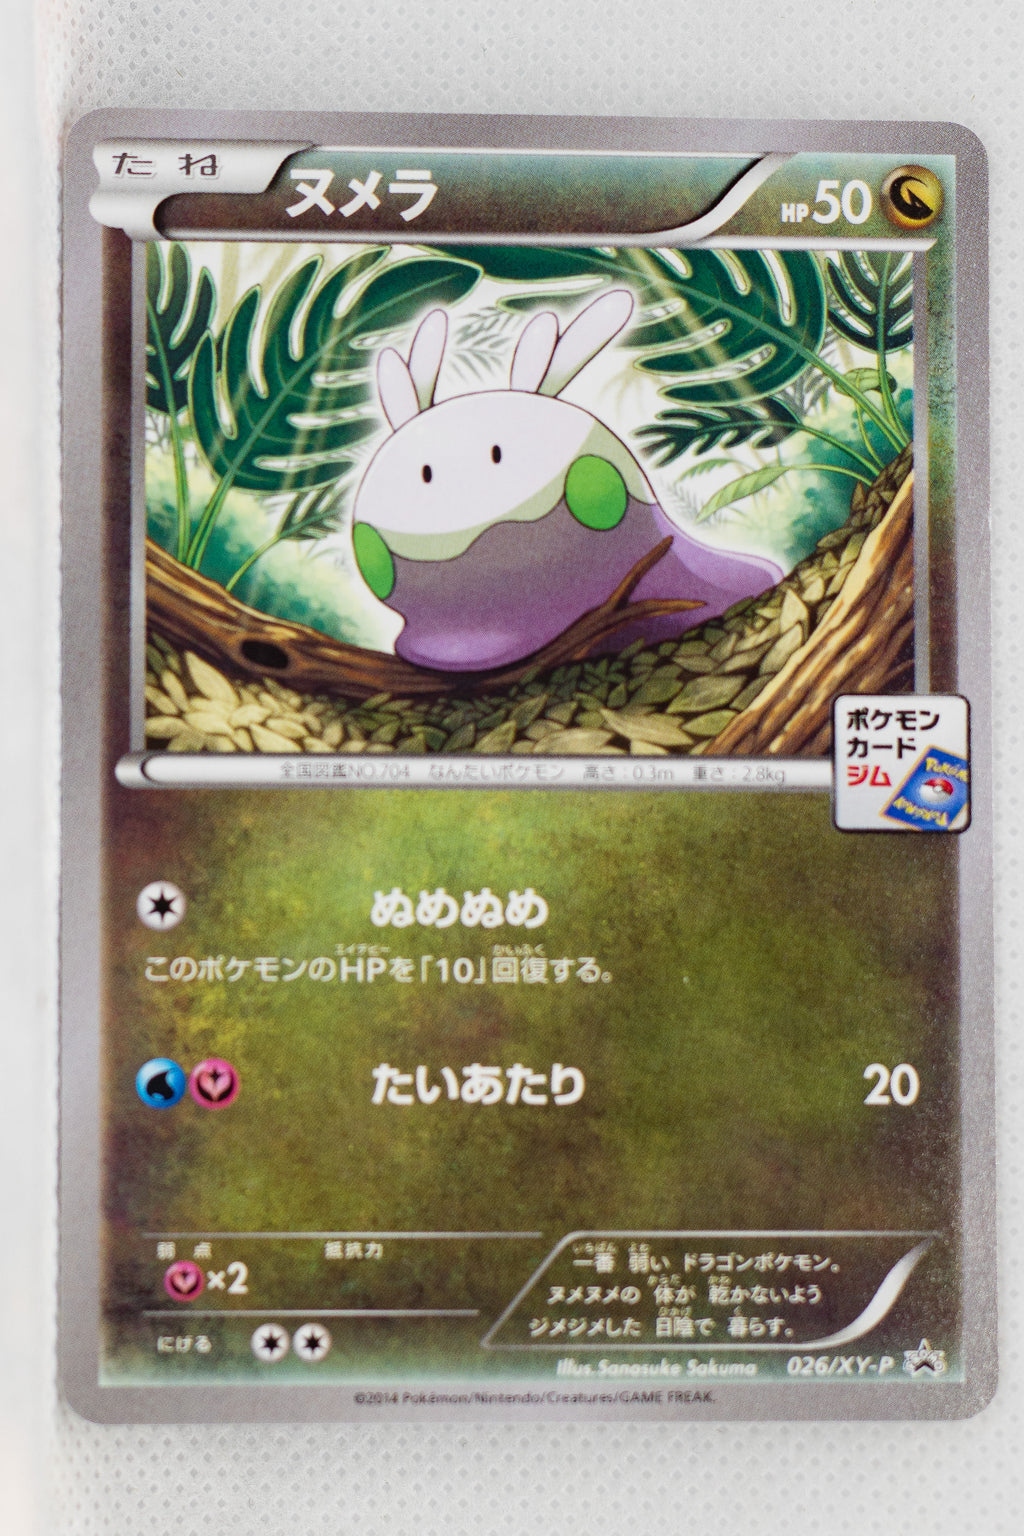 026/XY-P Goomy February 2014-April 2014 Pokémon Card Gym Pack